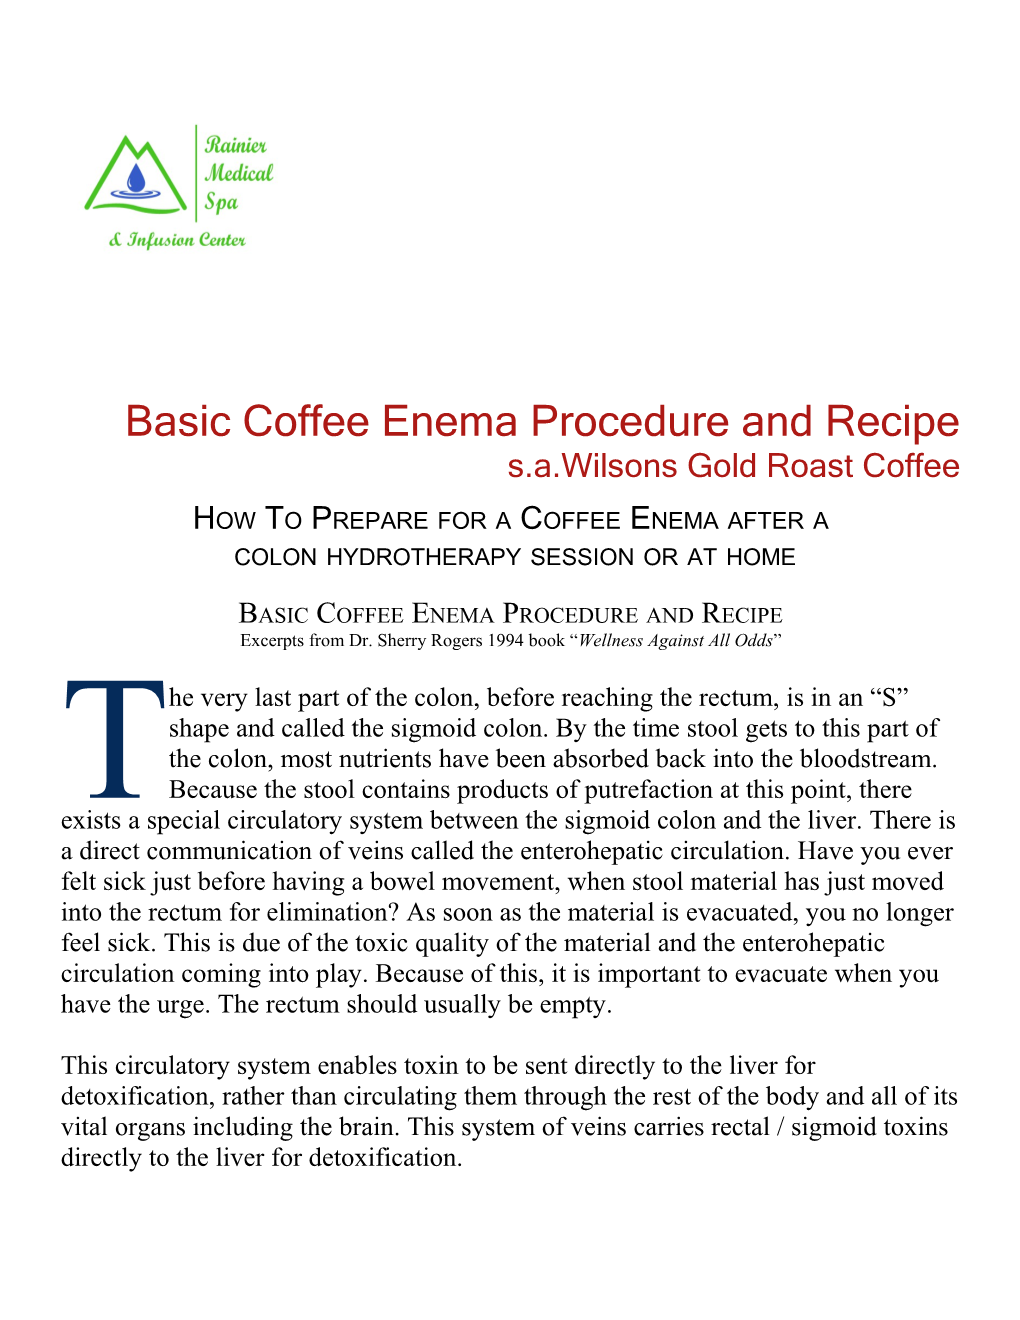 Basic Coffee Enema Procedure and Recipe S.A.Wilsons Gold Roast Coffee